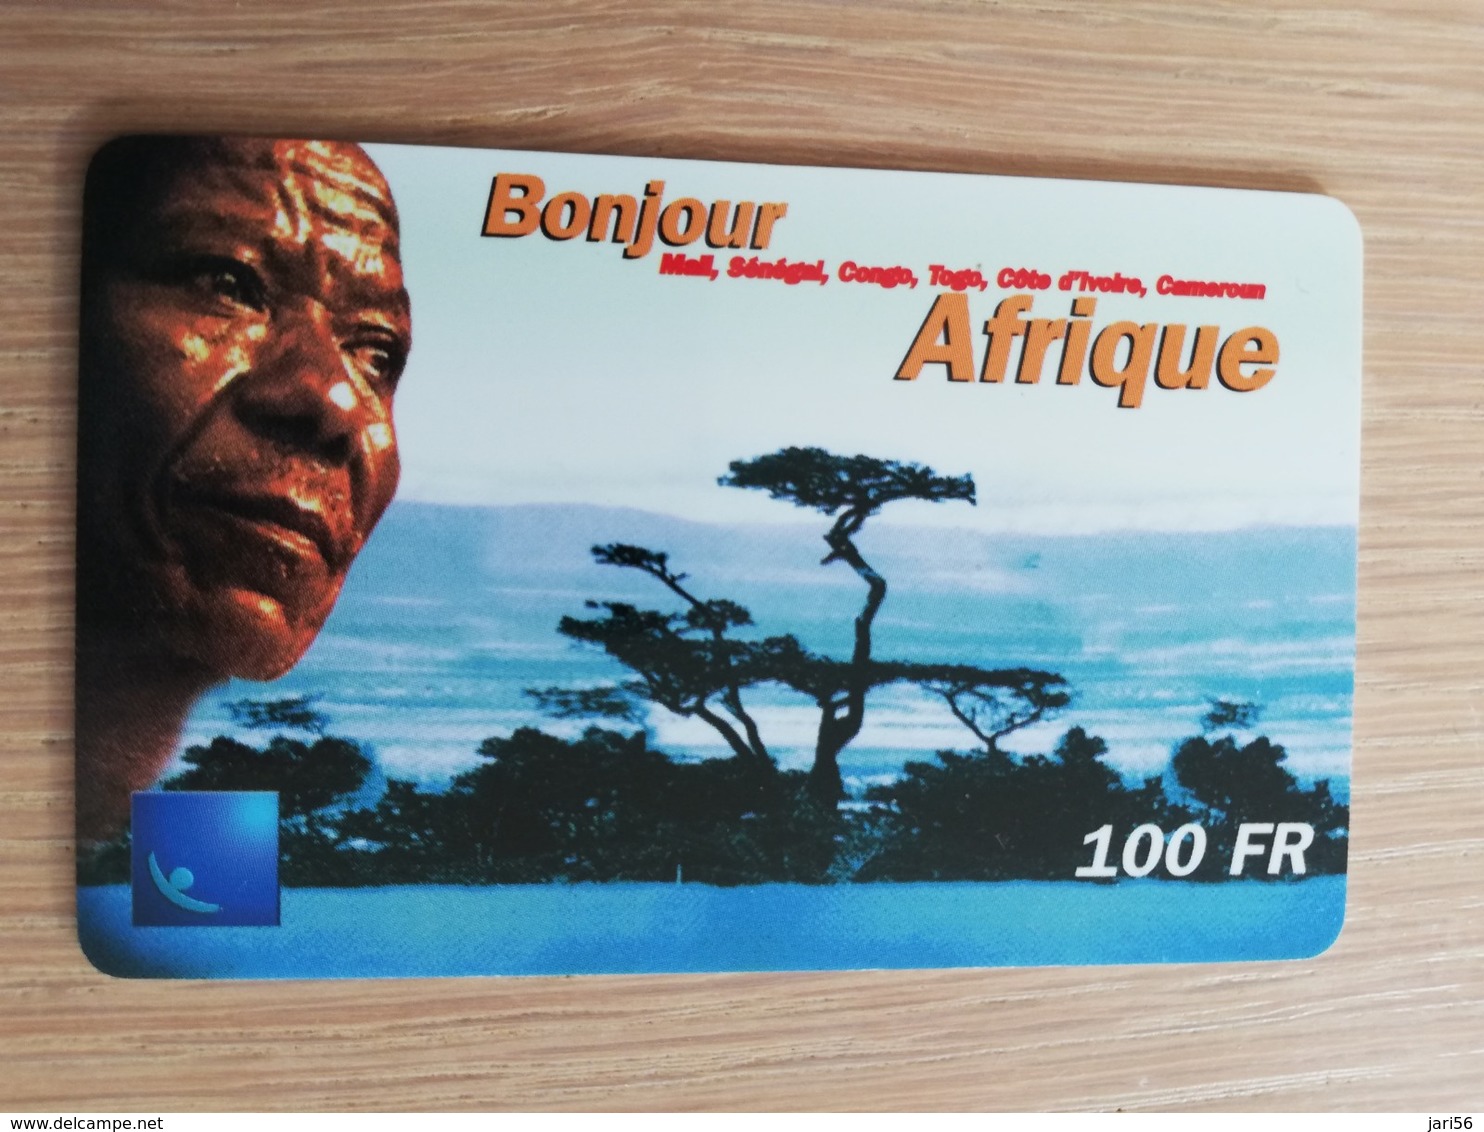 FRANCE/FRANKRIJK   Bonjour Afrique   PREPAID  USED    ** 1482** - Per Cellulari (telefonini/schede SIM)